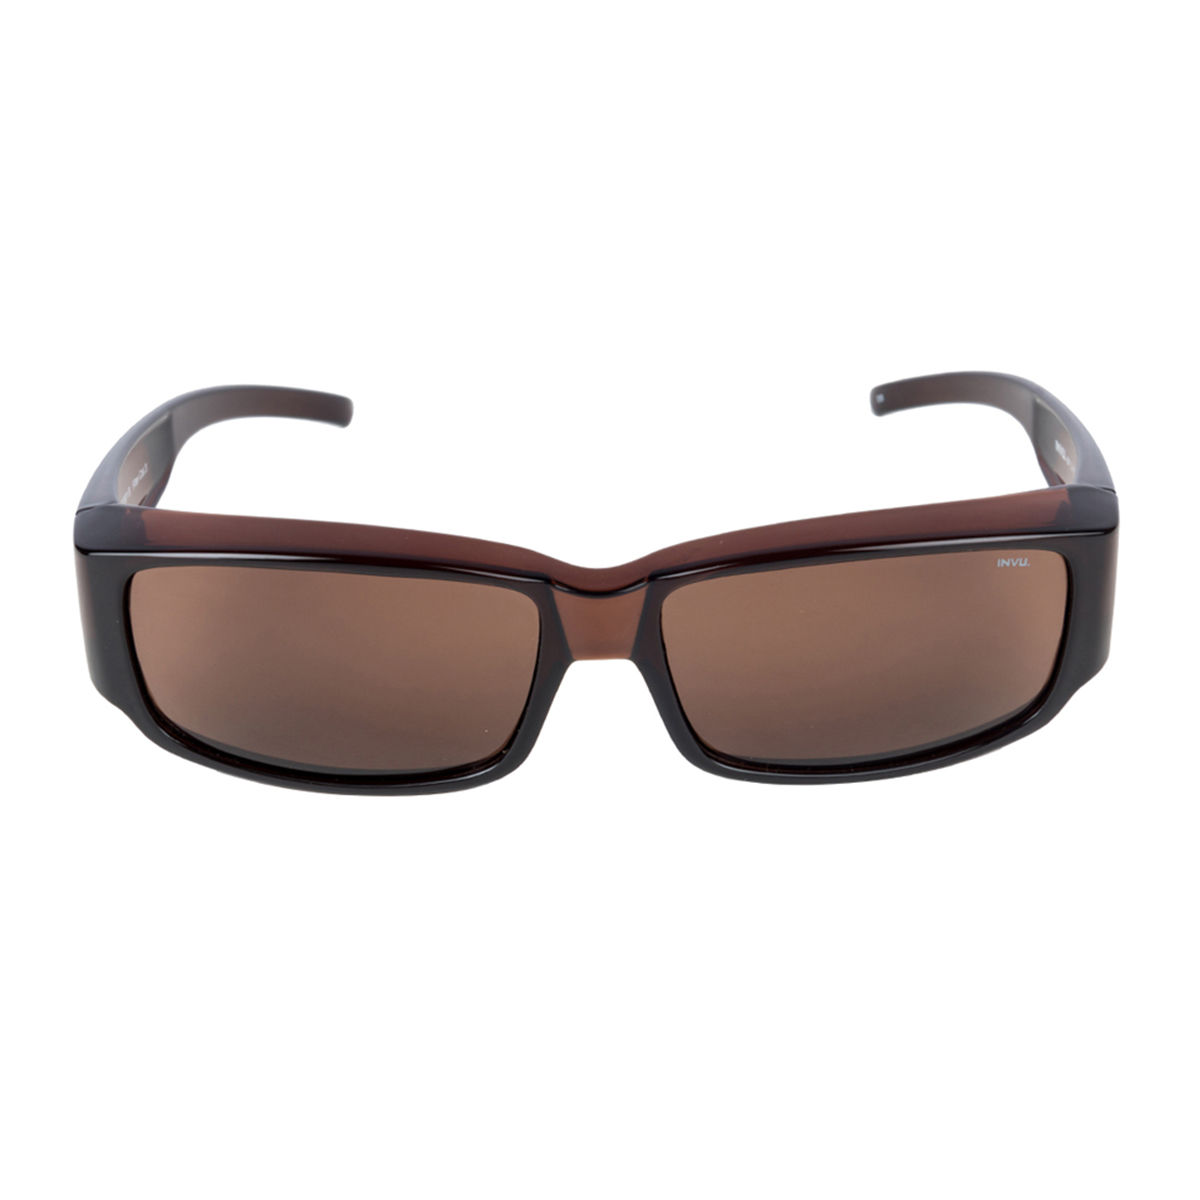 Invu Sunglasses Rectangular Sunglass With Copper Lens For Men